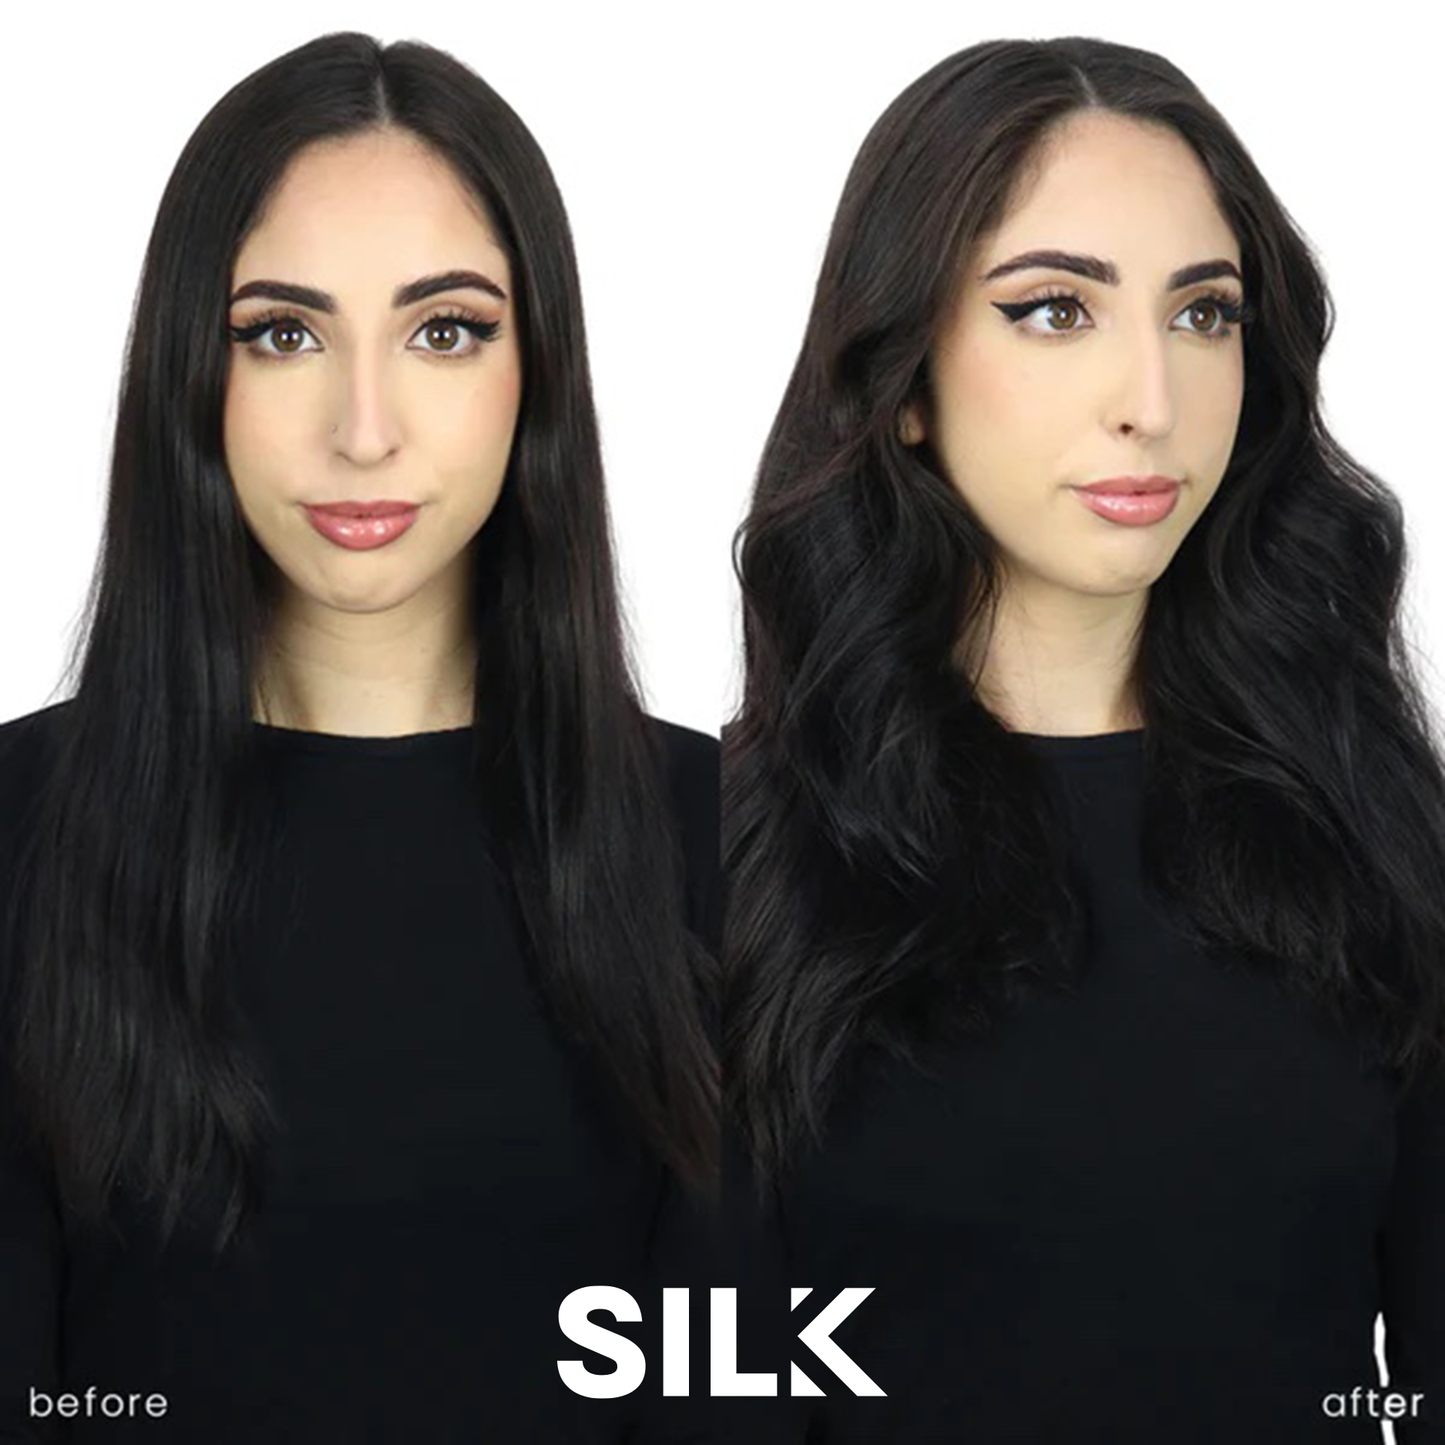 Revive7 SILK Wave Heatless Hair Curler